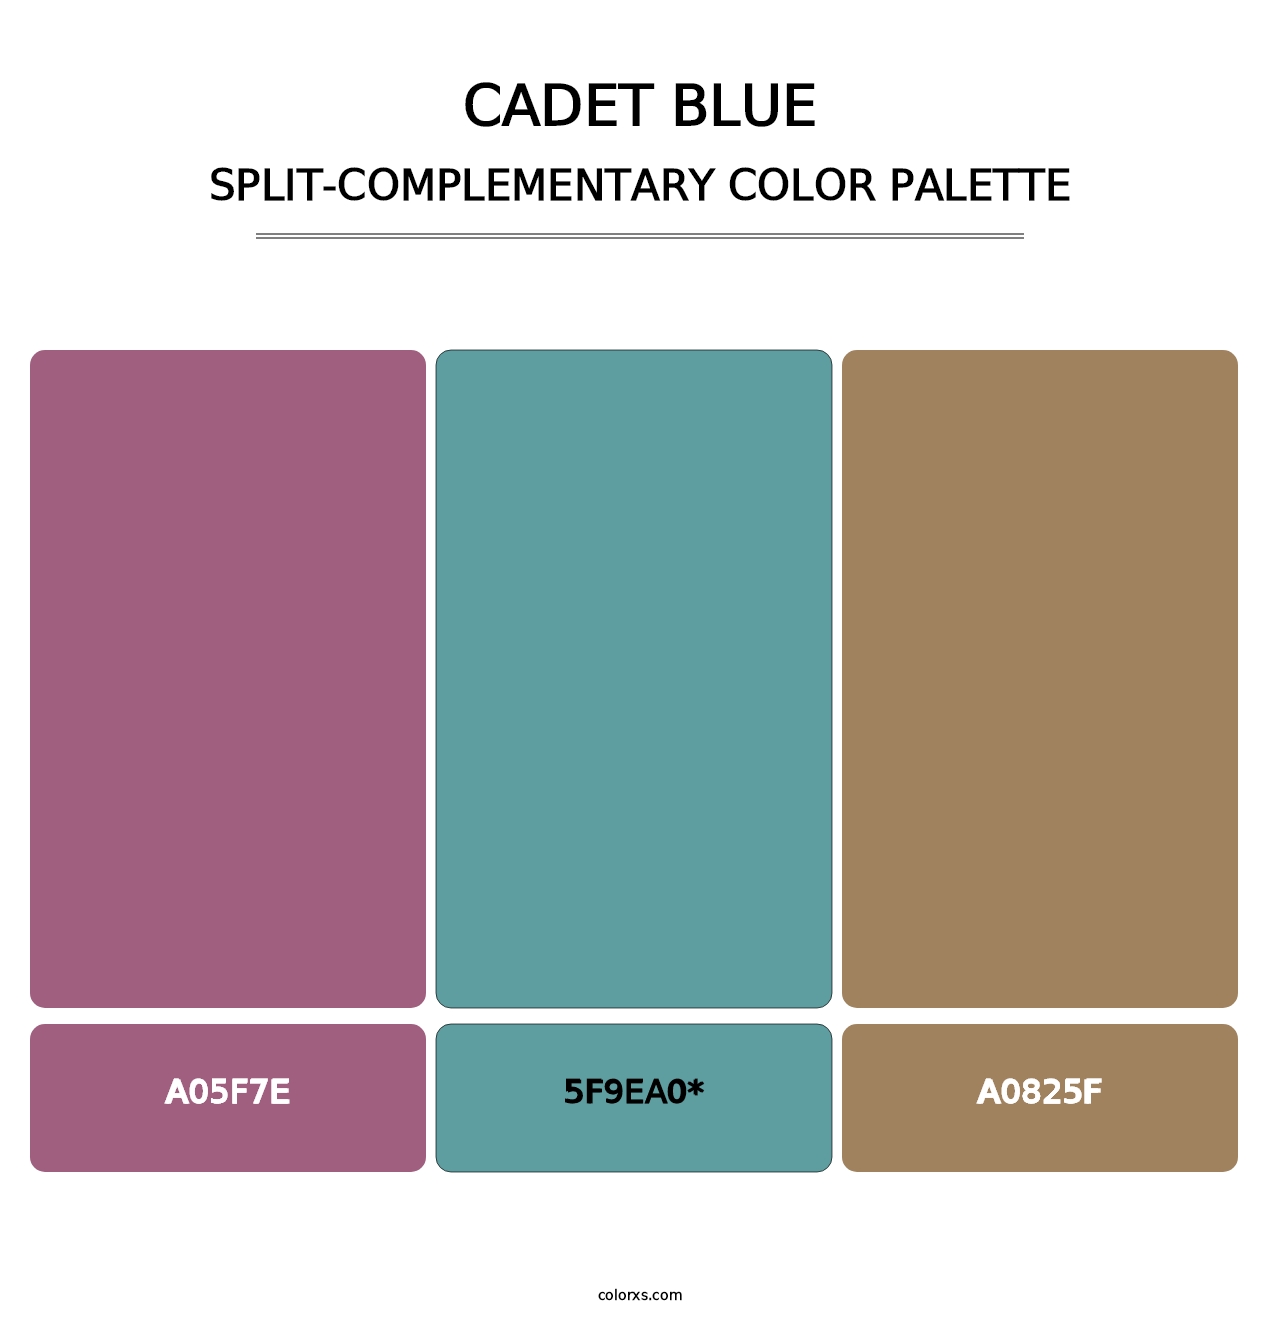 Cadet Blue - Split-Complementary Color Palette